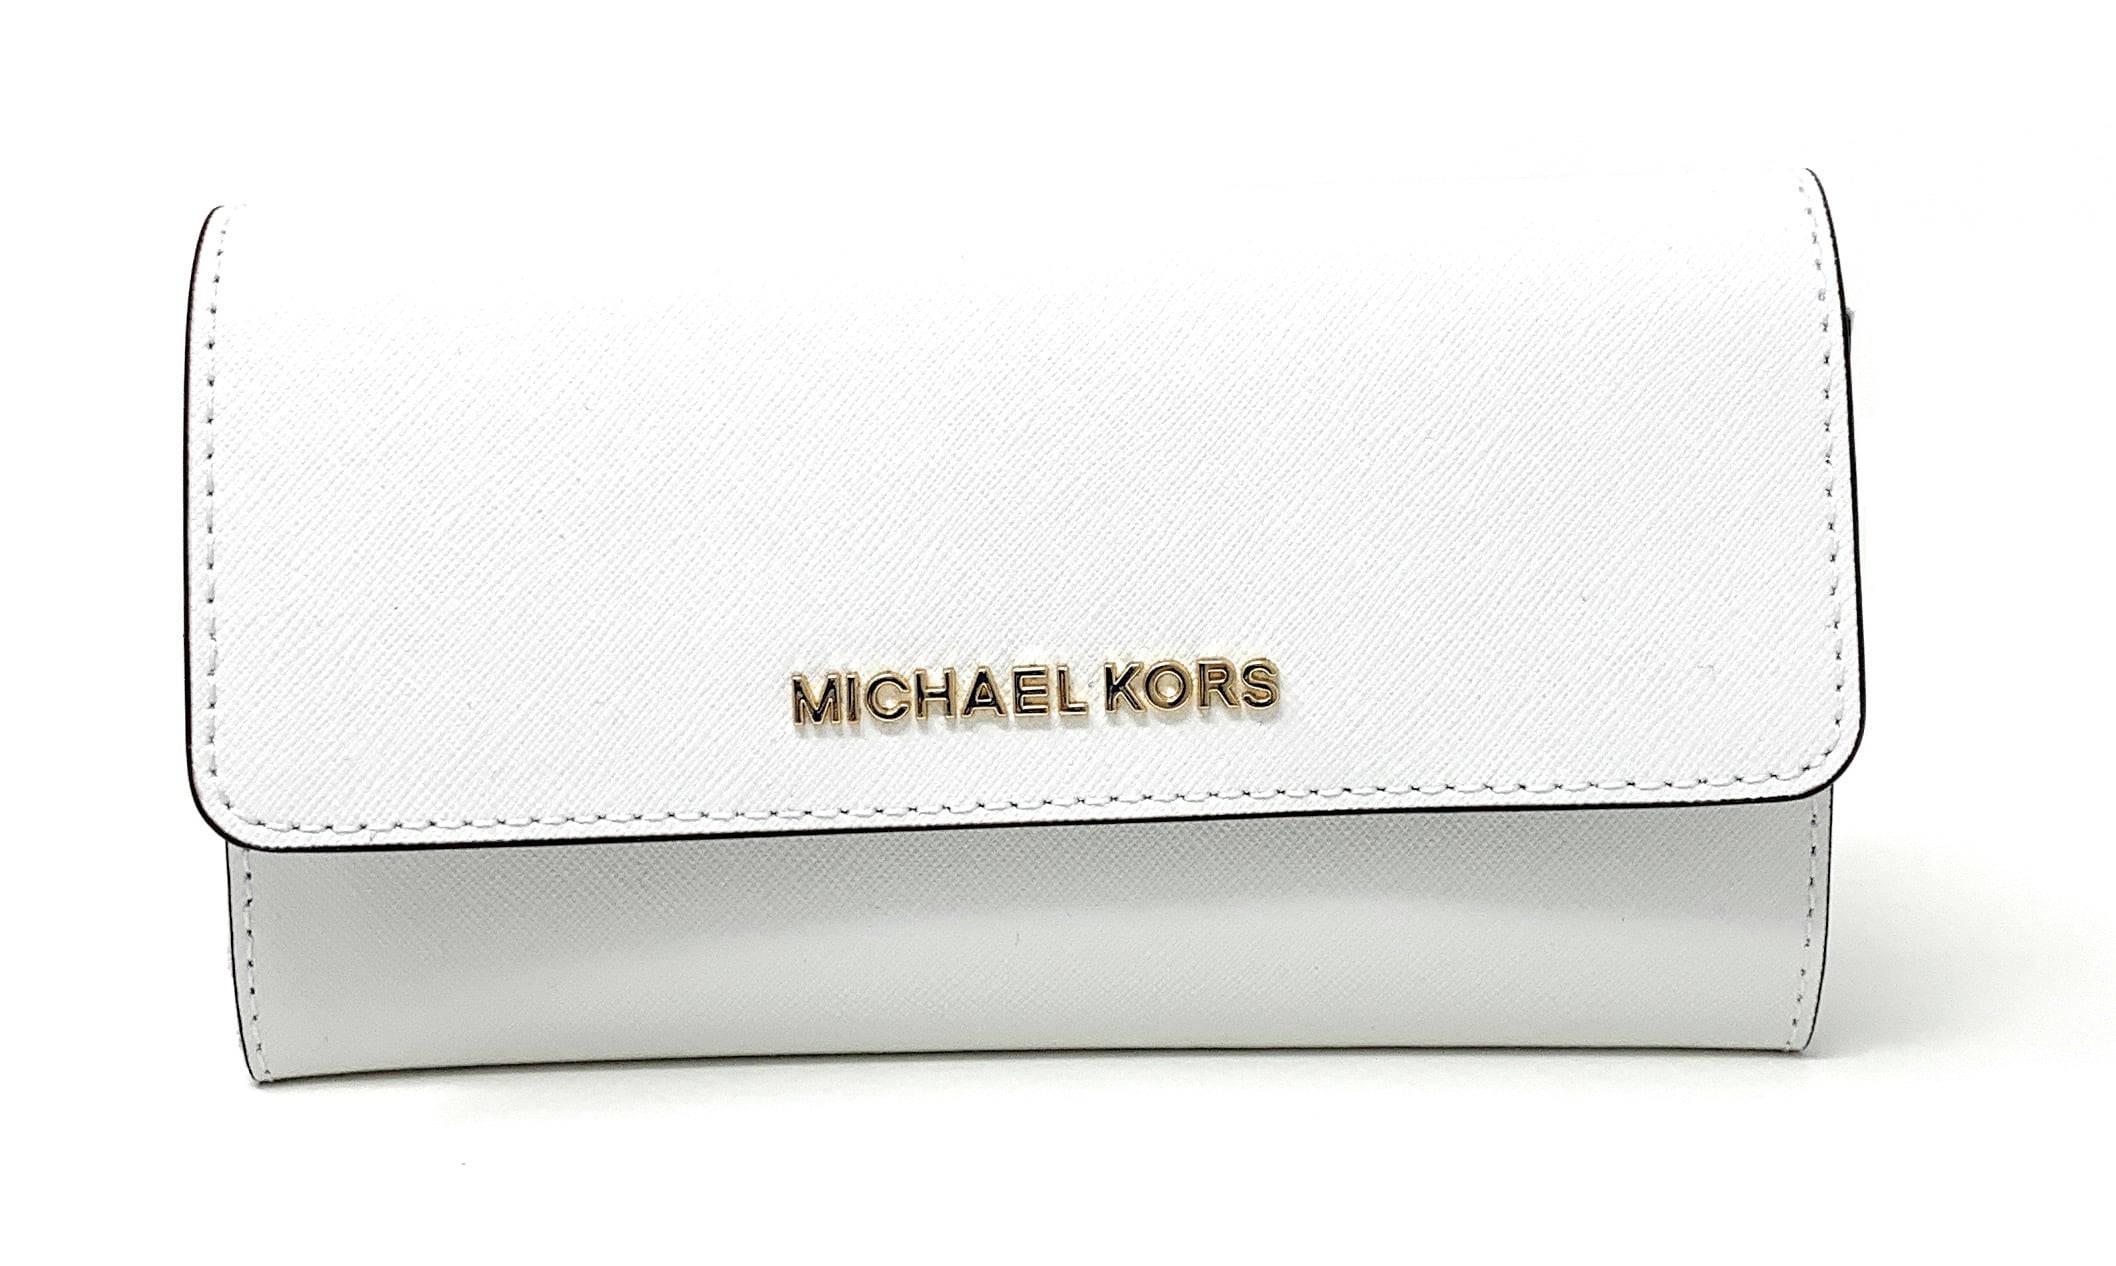 michael kors wallet how much